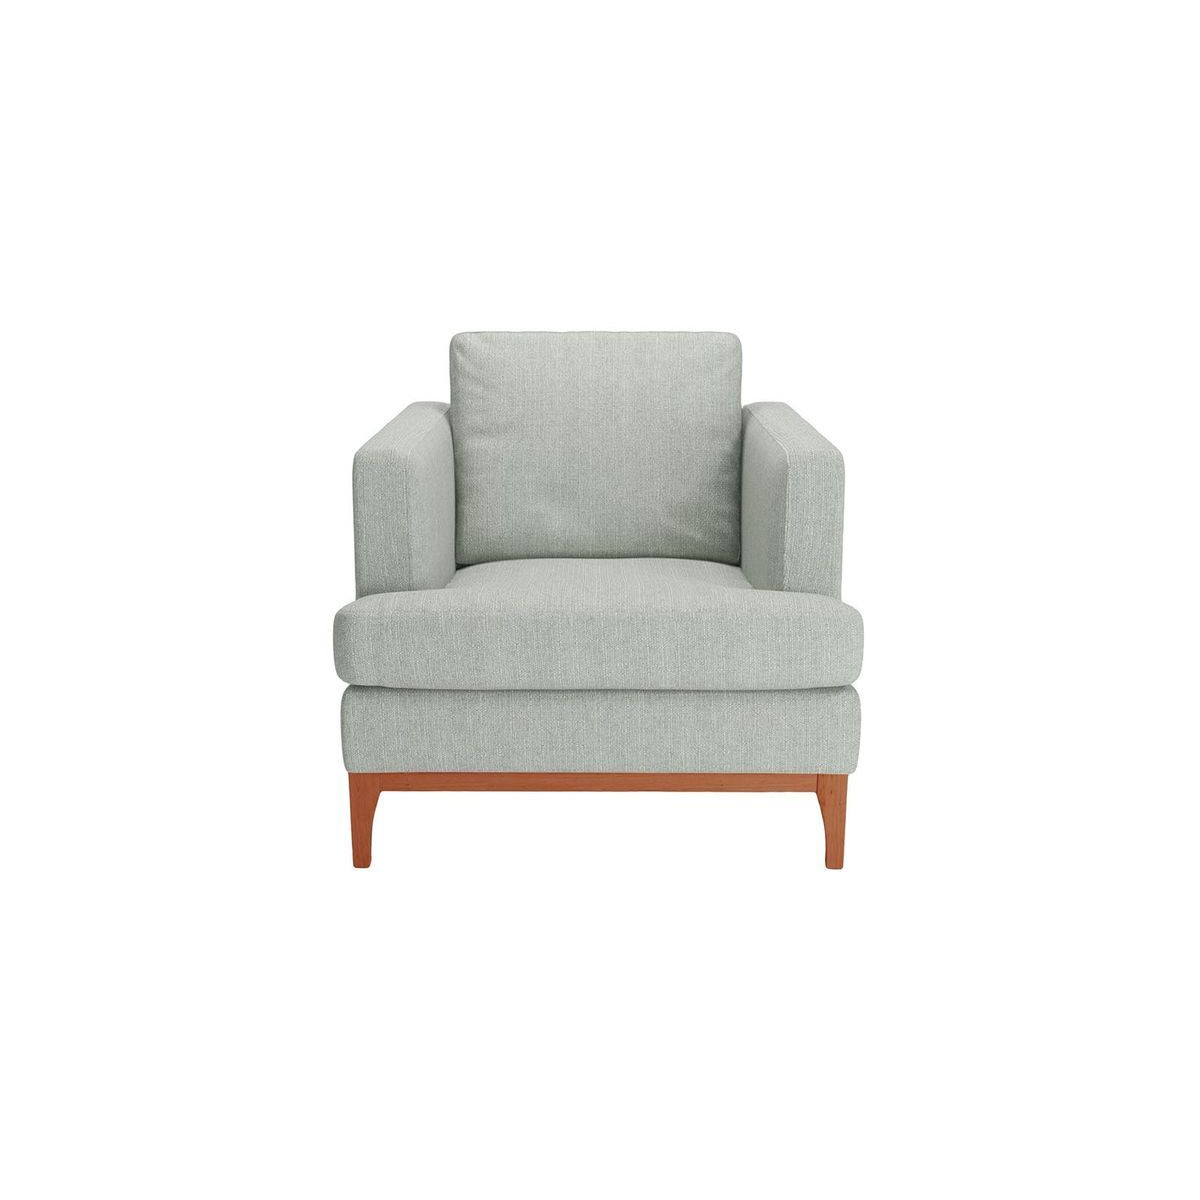 Scarlett Structured Armchair, light blue, Leg colour: aveo - image 1